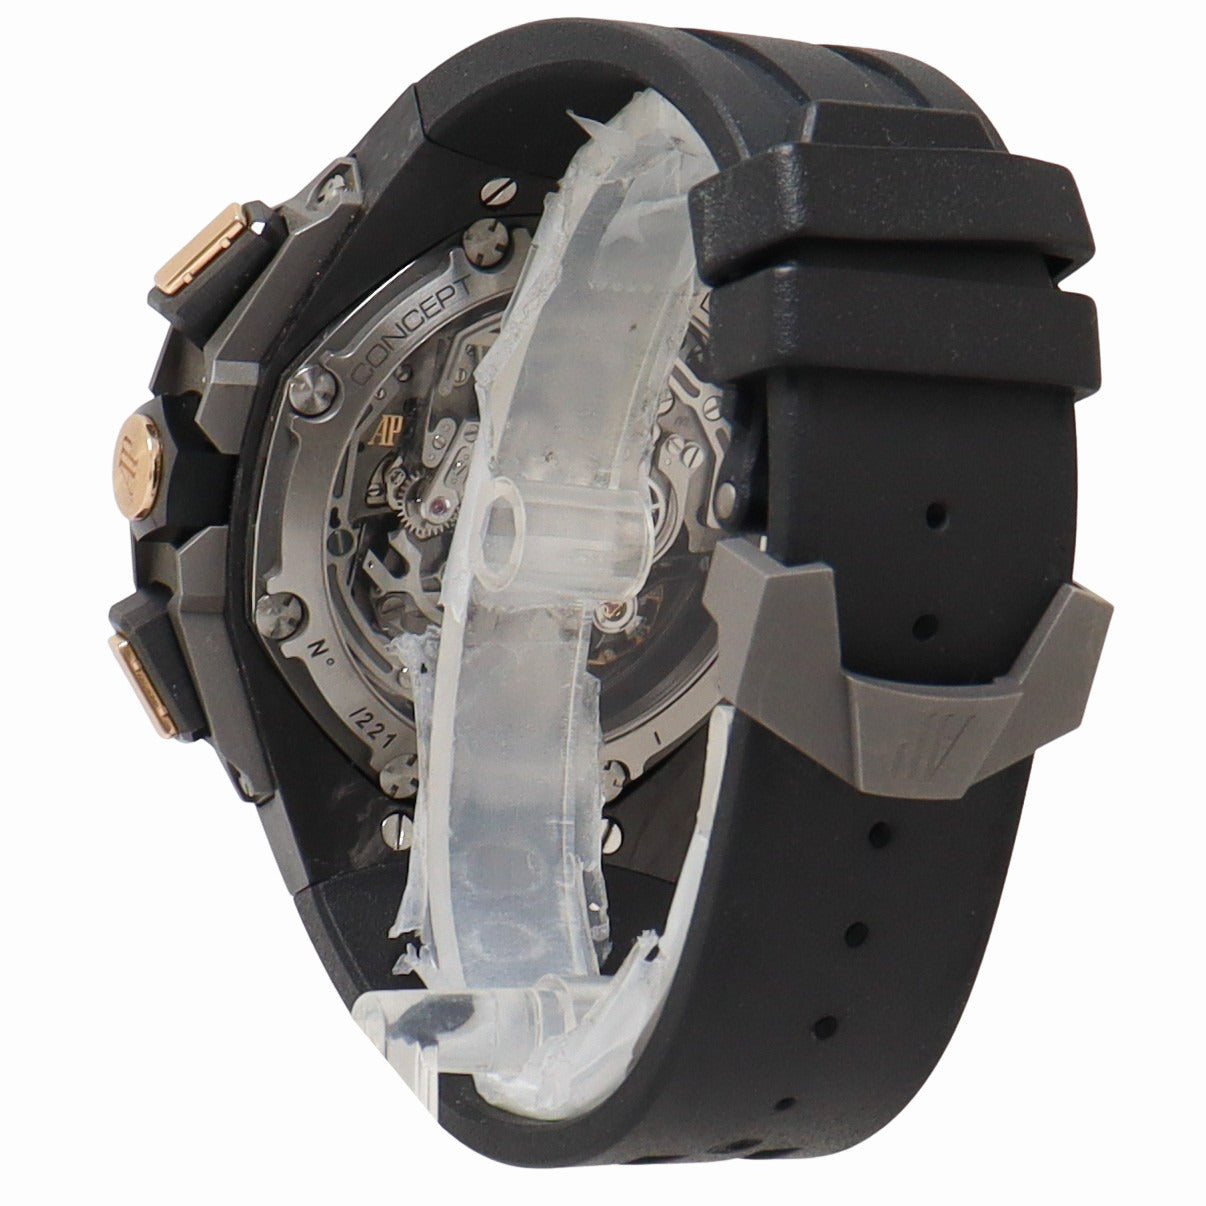 Audemars Piguet Royal Oak Concept Laptimer Michael Schumacher 44mm Forged Carbon Skeleton Dial Watch Reference# 26221FT.OO.D002CA.01 - Happy Jewelers Fine Jewelry Lifetime Warranty